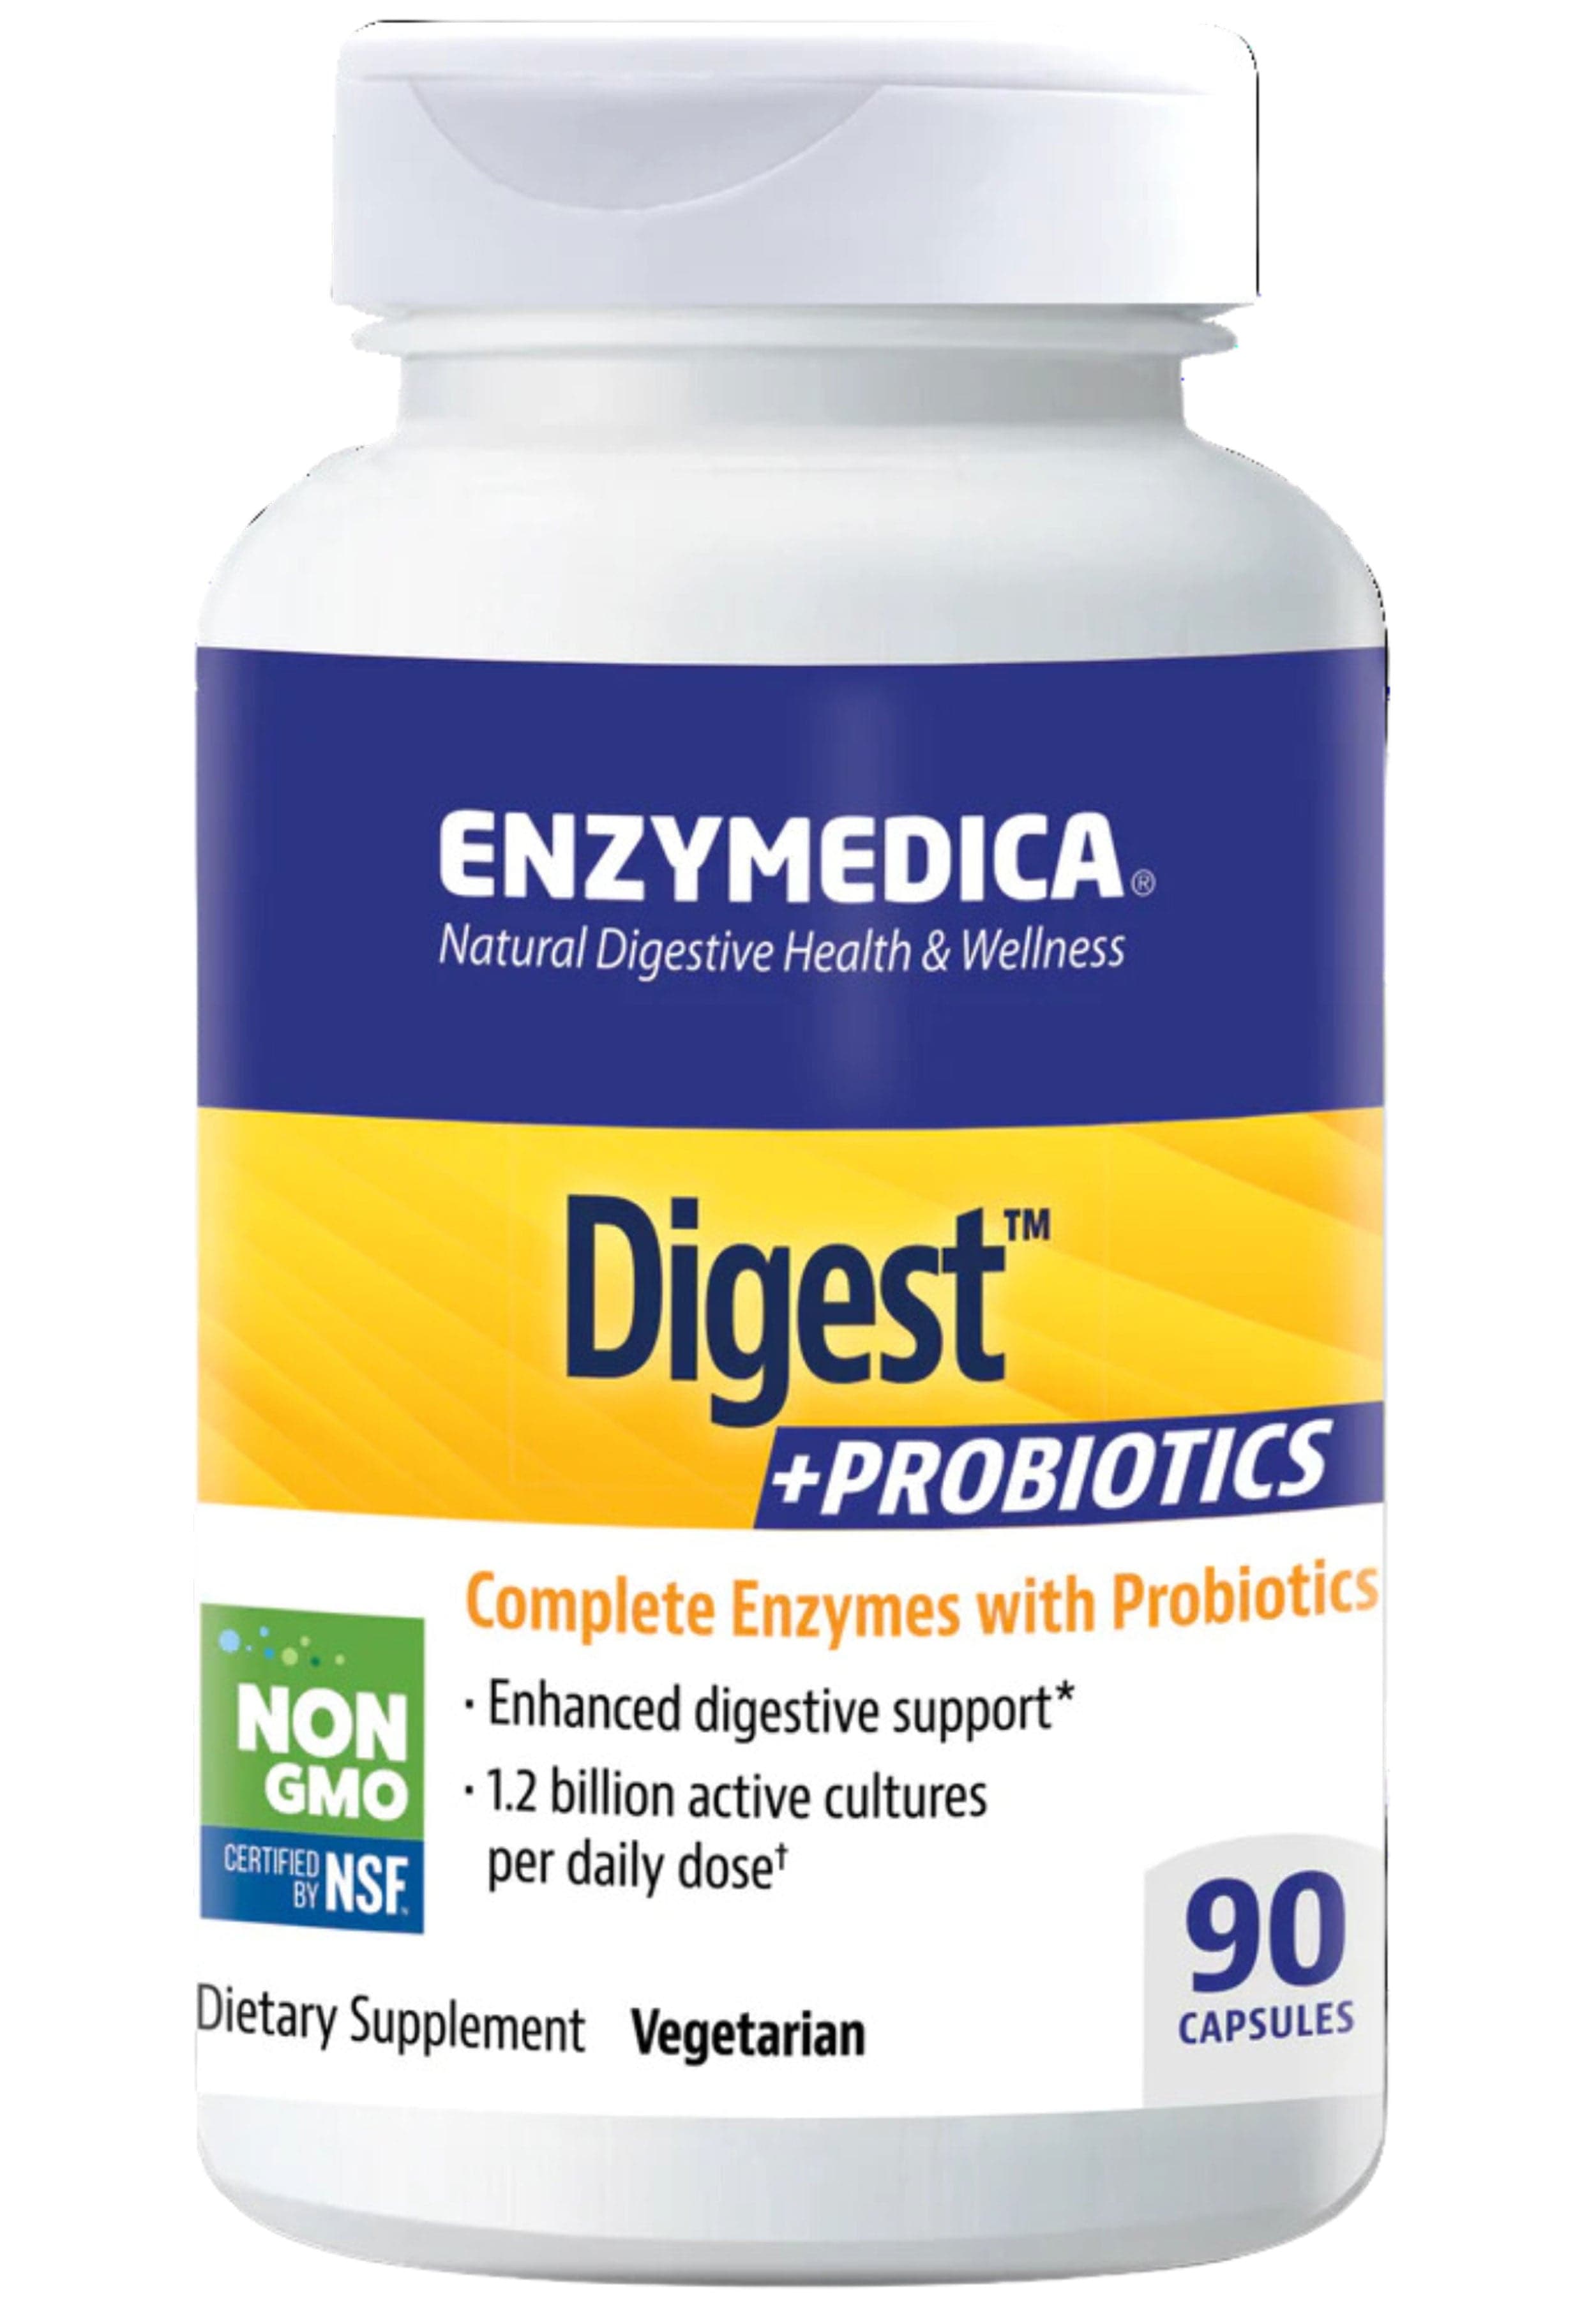 Enzymedica Digest +Probiotics